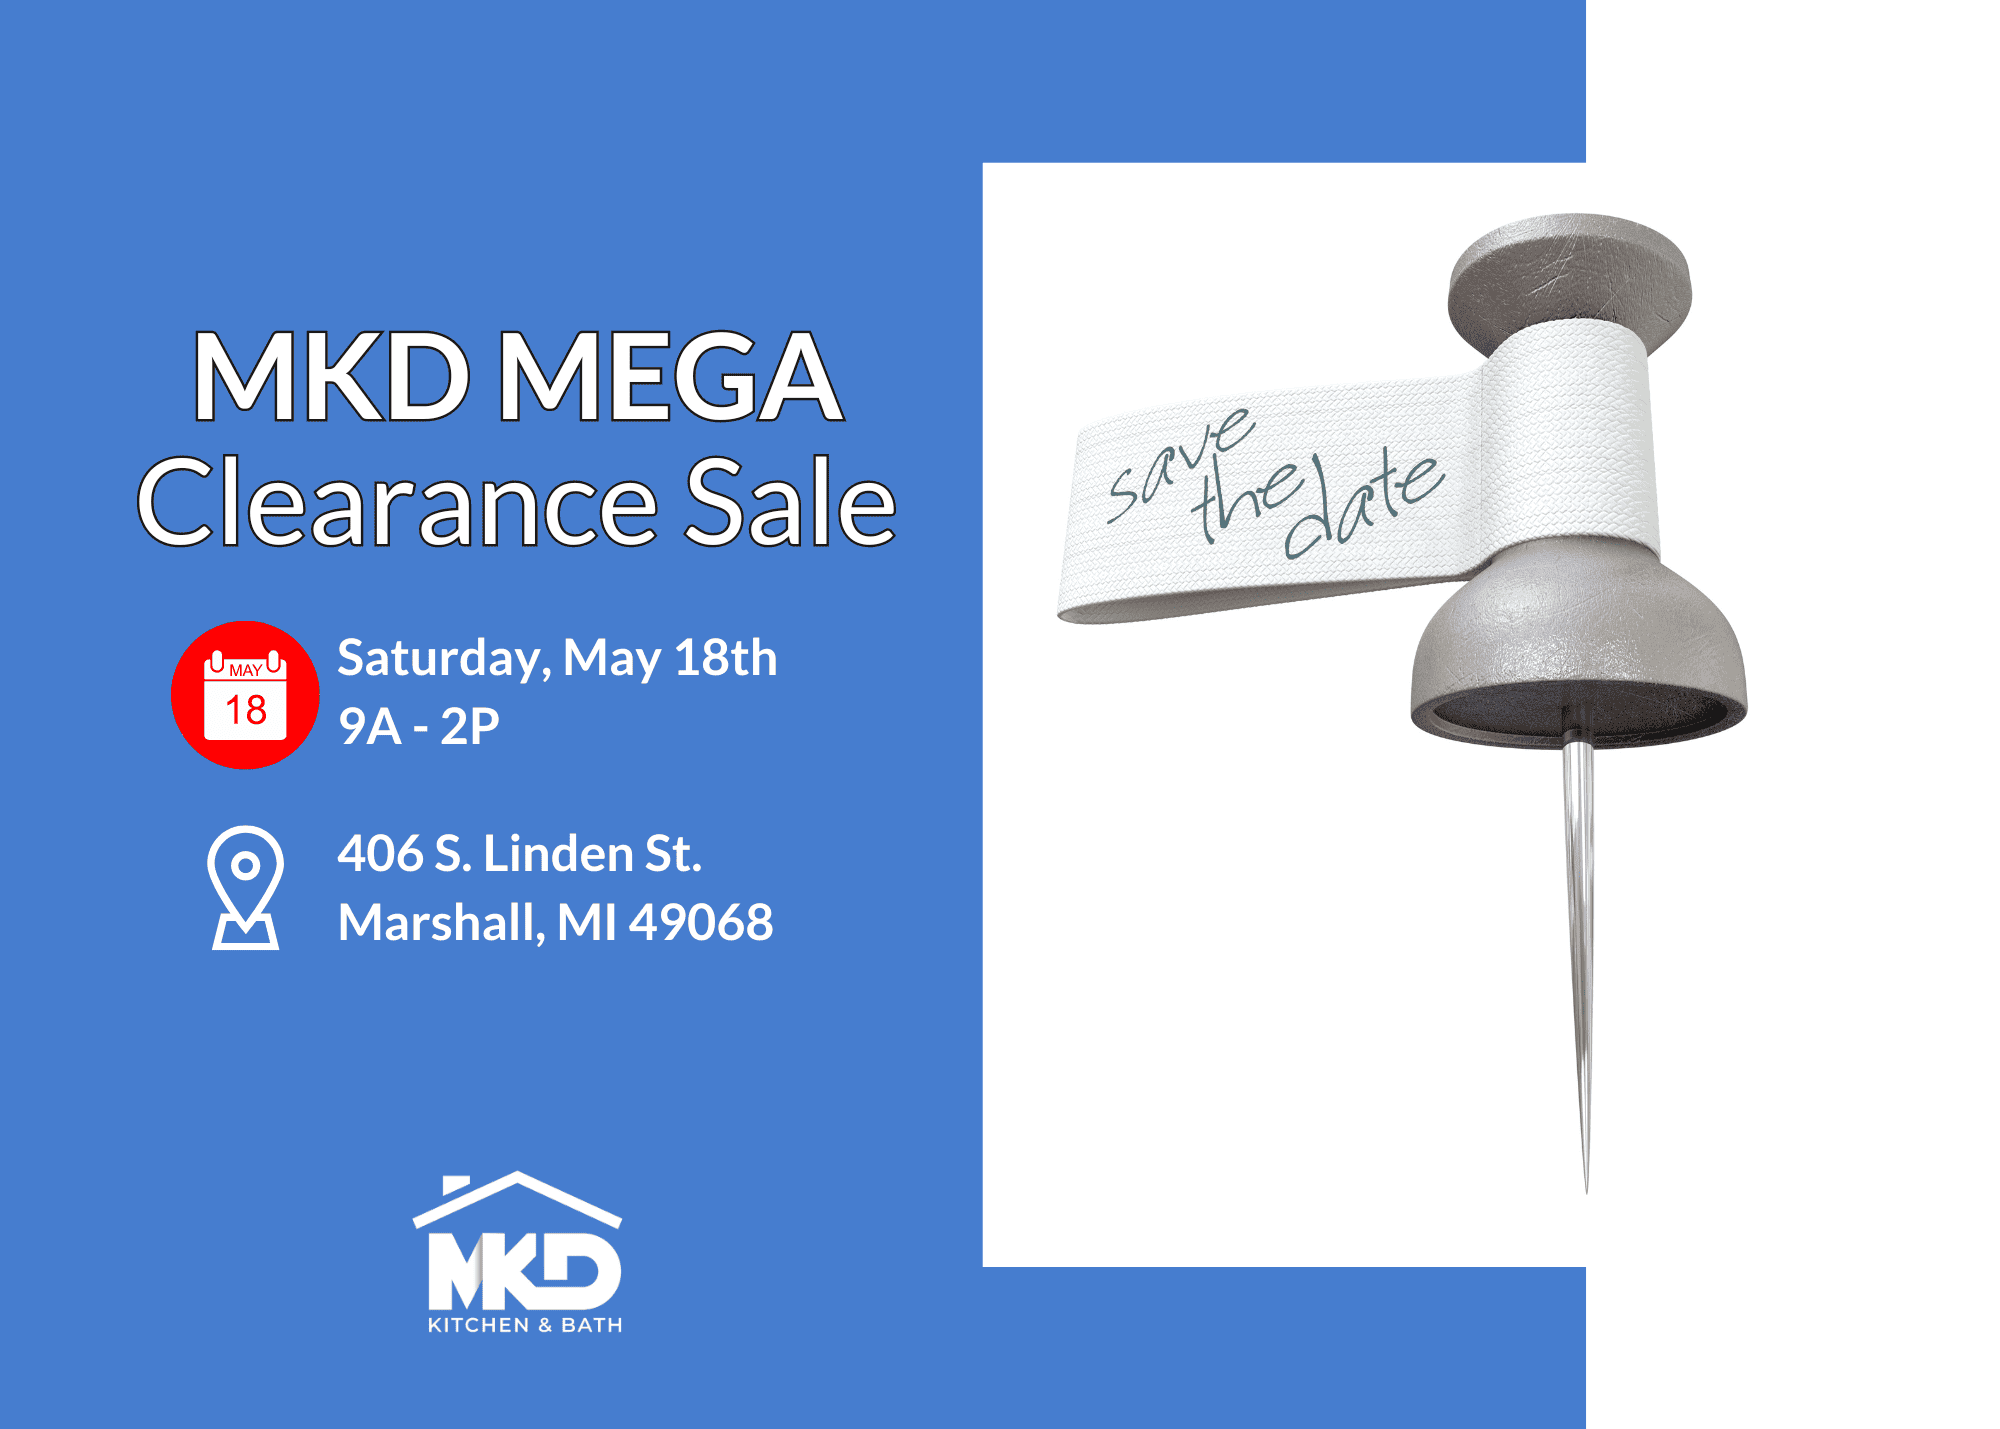 MKD Mega Clearance Sale